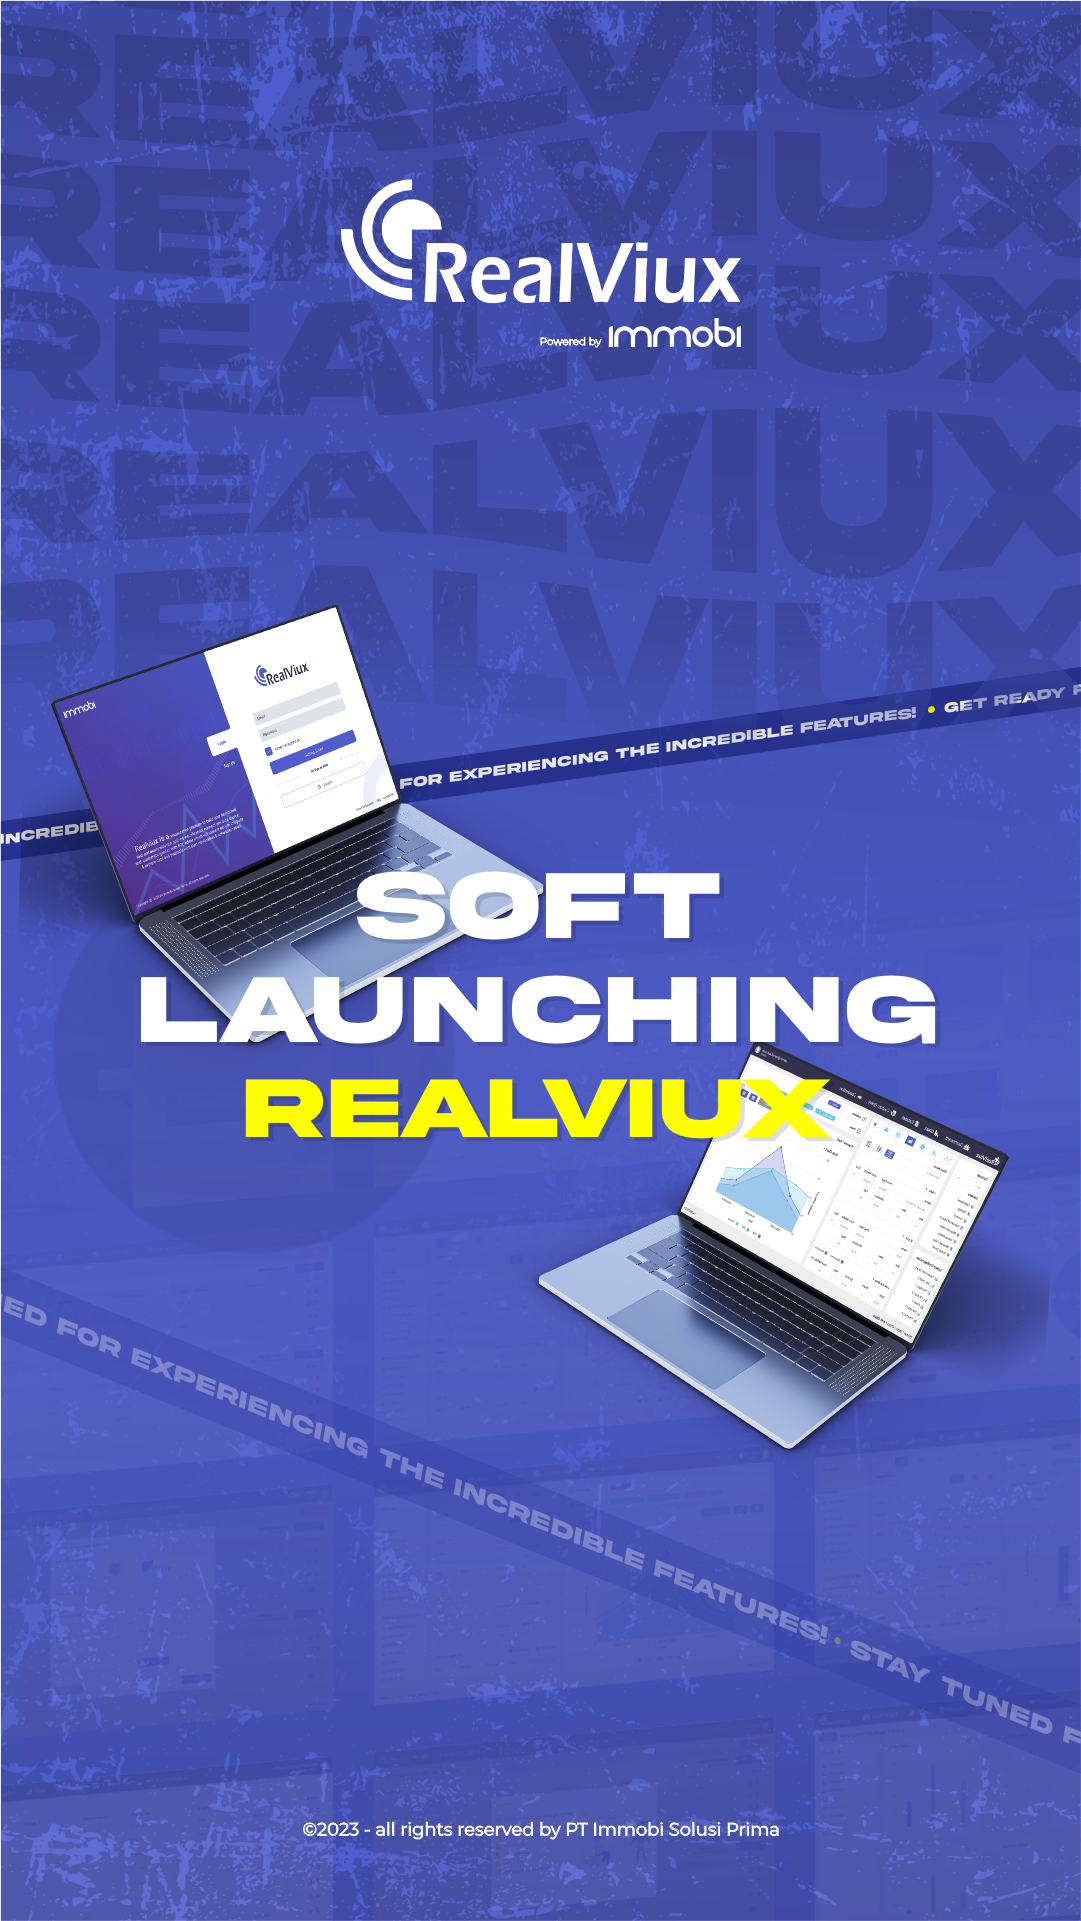 Realviux Launching